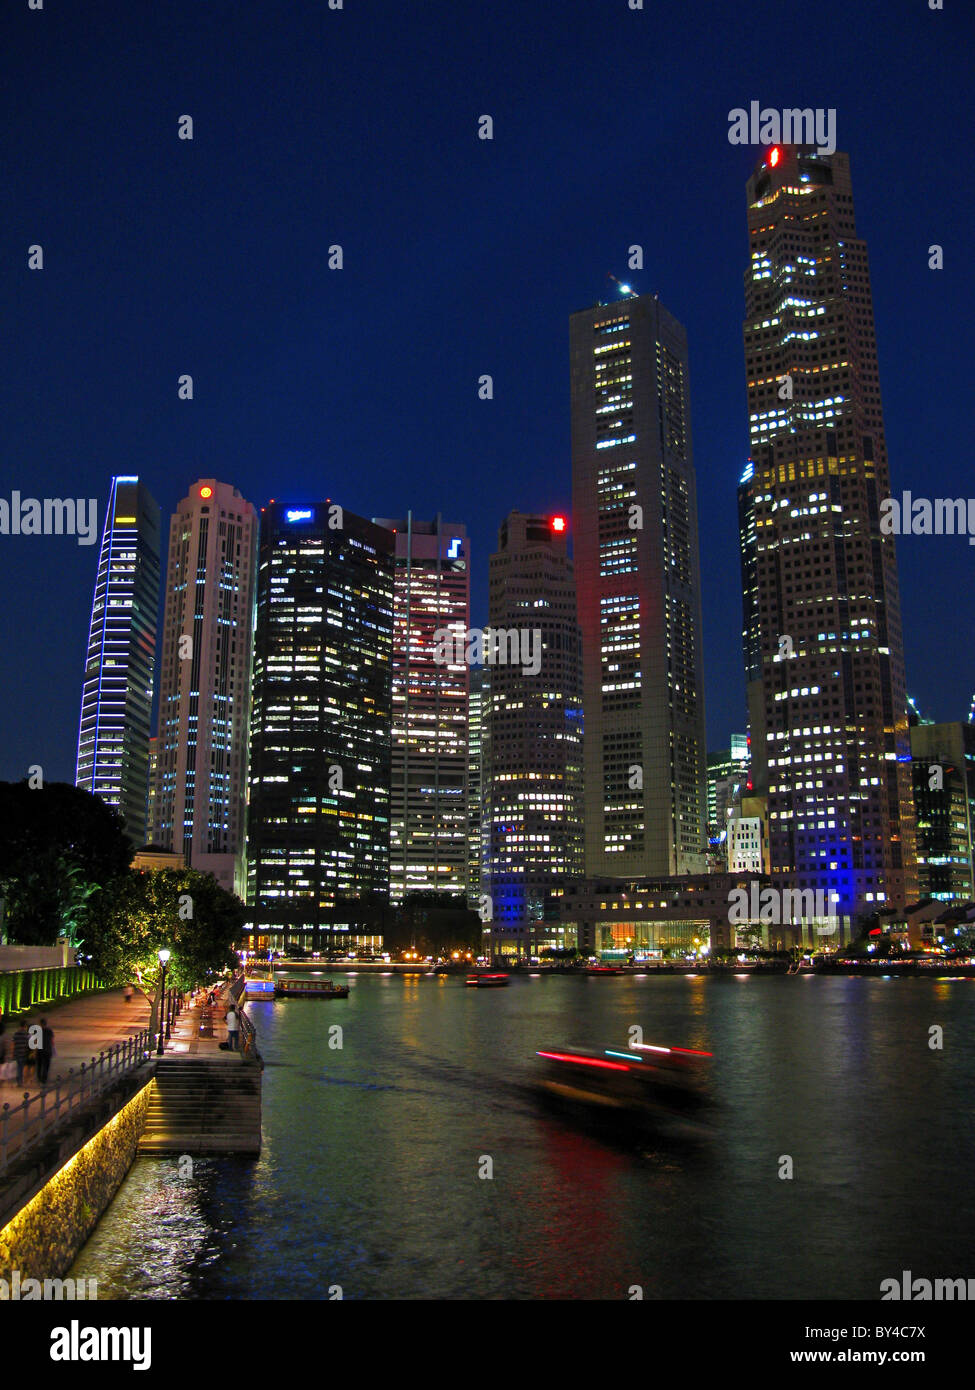 Singapore CBD (Central Business District) skyline at night Stock Photo